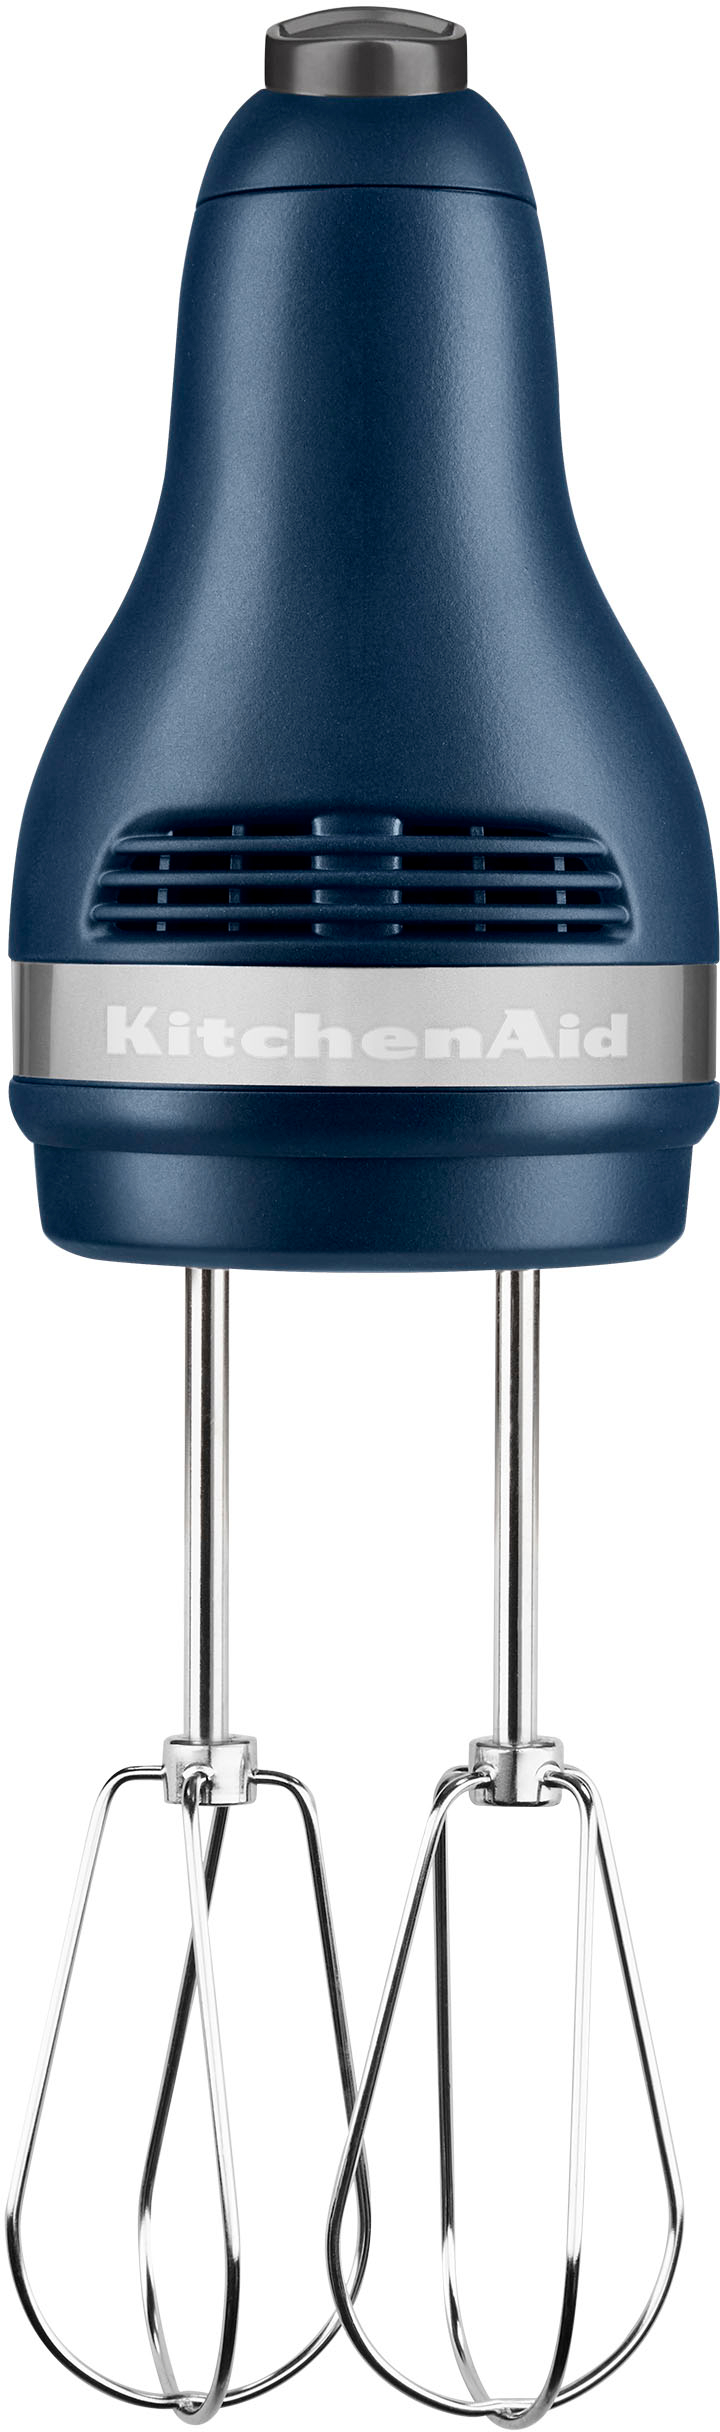 Kitchenaid Khm512ib Ultra Power 5 Speed Hand Mixer Ink Blue Khm512ib Best Buy